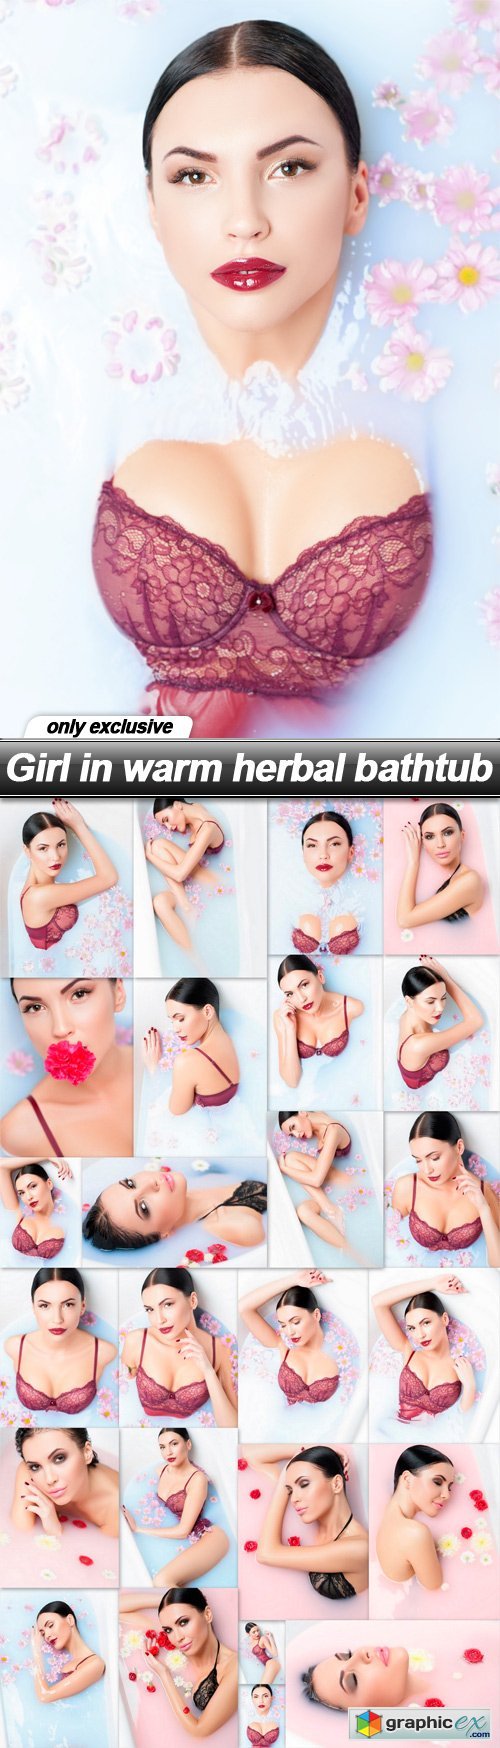 Girl in warm herbal bathtub - 25 UHQ JPEG